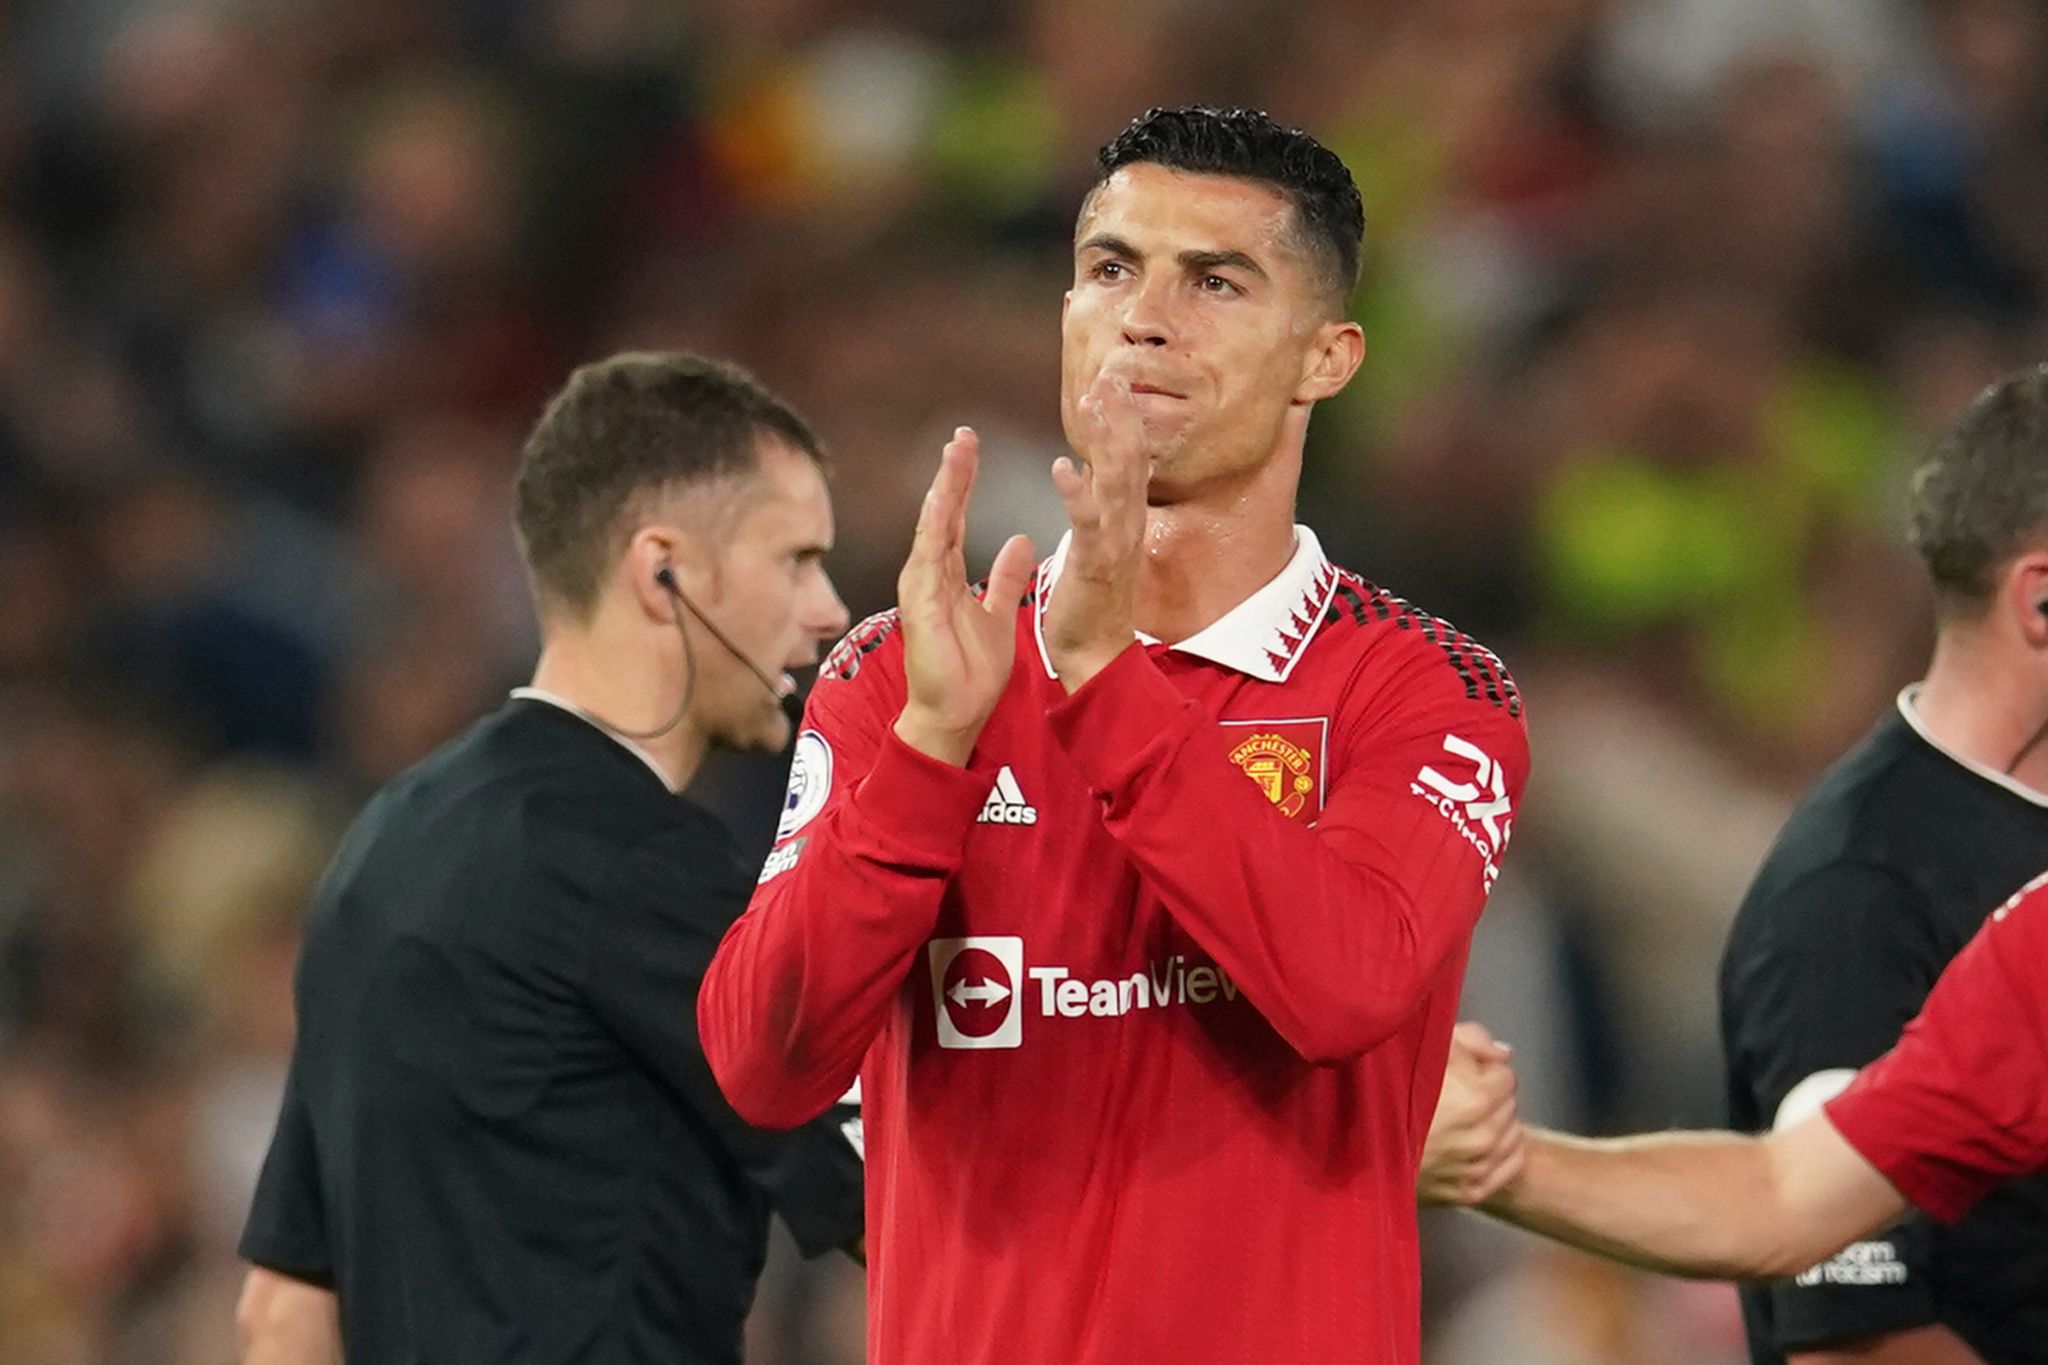 Soll das Angebot eines Clubs in Saudi Arabien abgelehnt haben: Cristiano Ronaldo. (© Dave Thompson/AP/dpa)